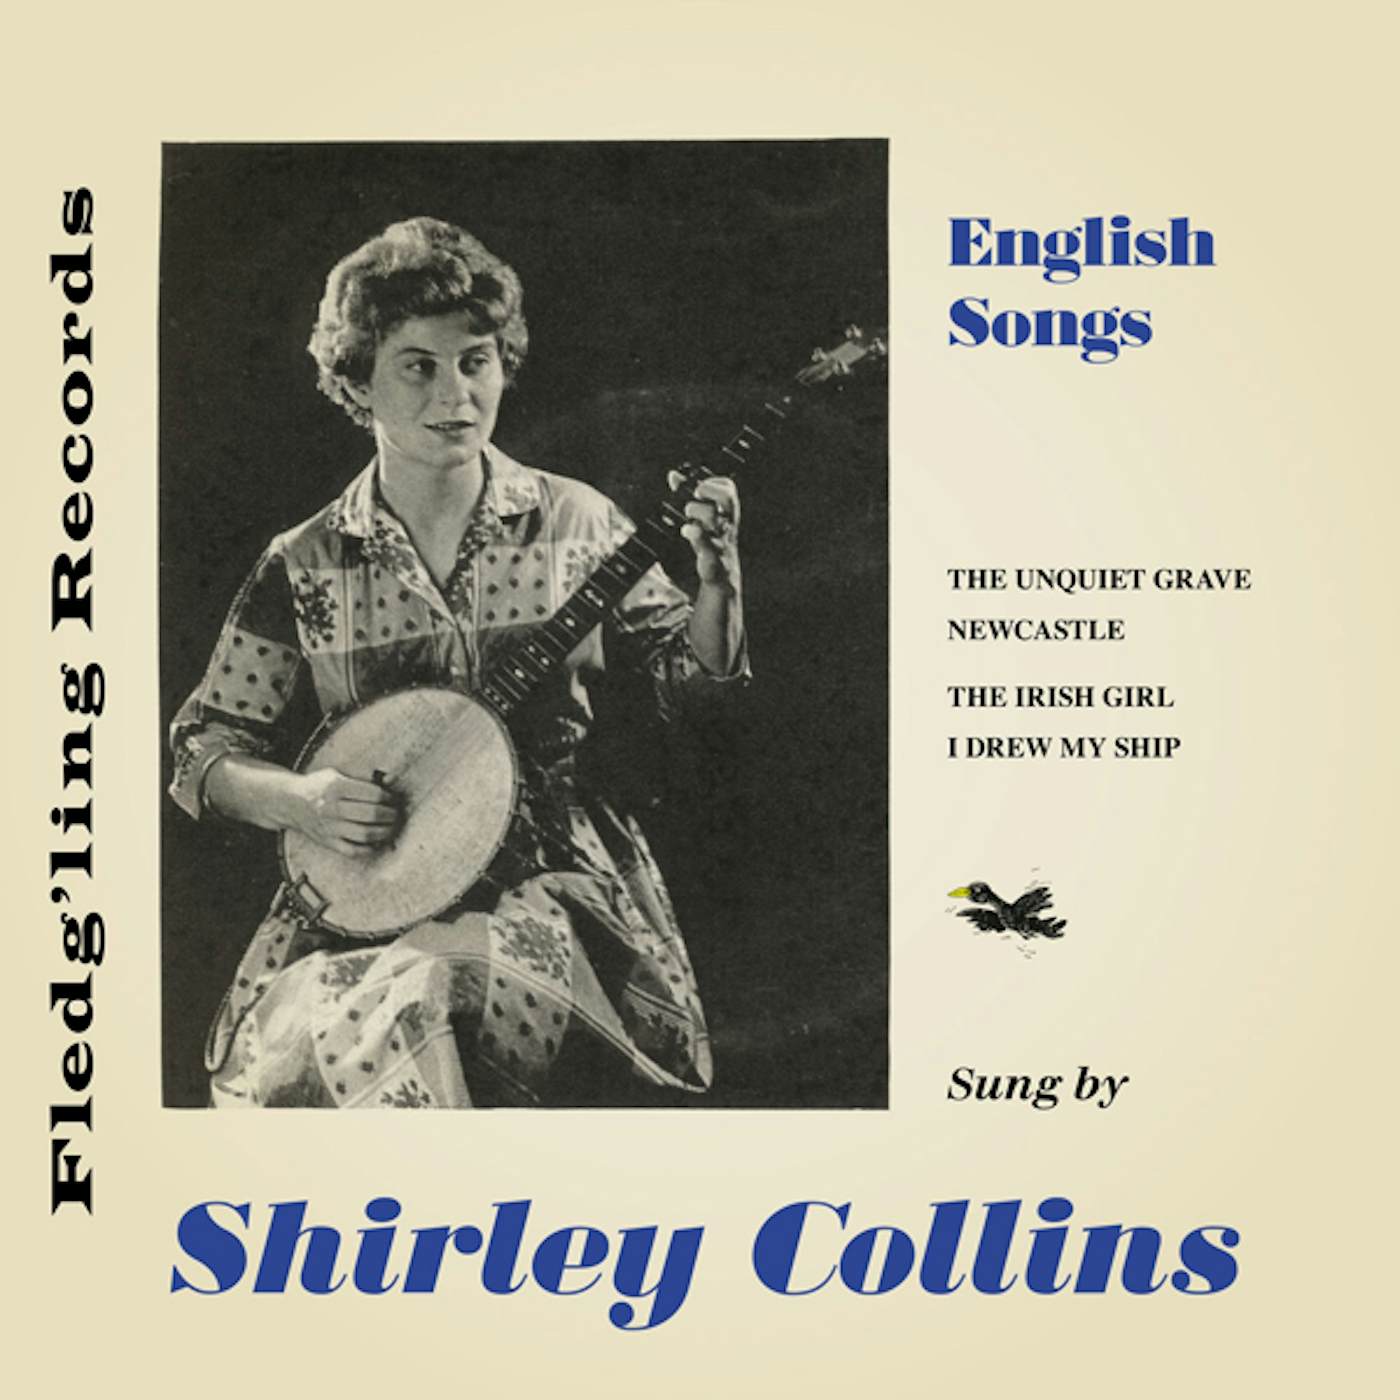 Shirley Collins English Songs Vinyl Record